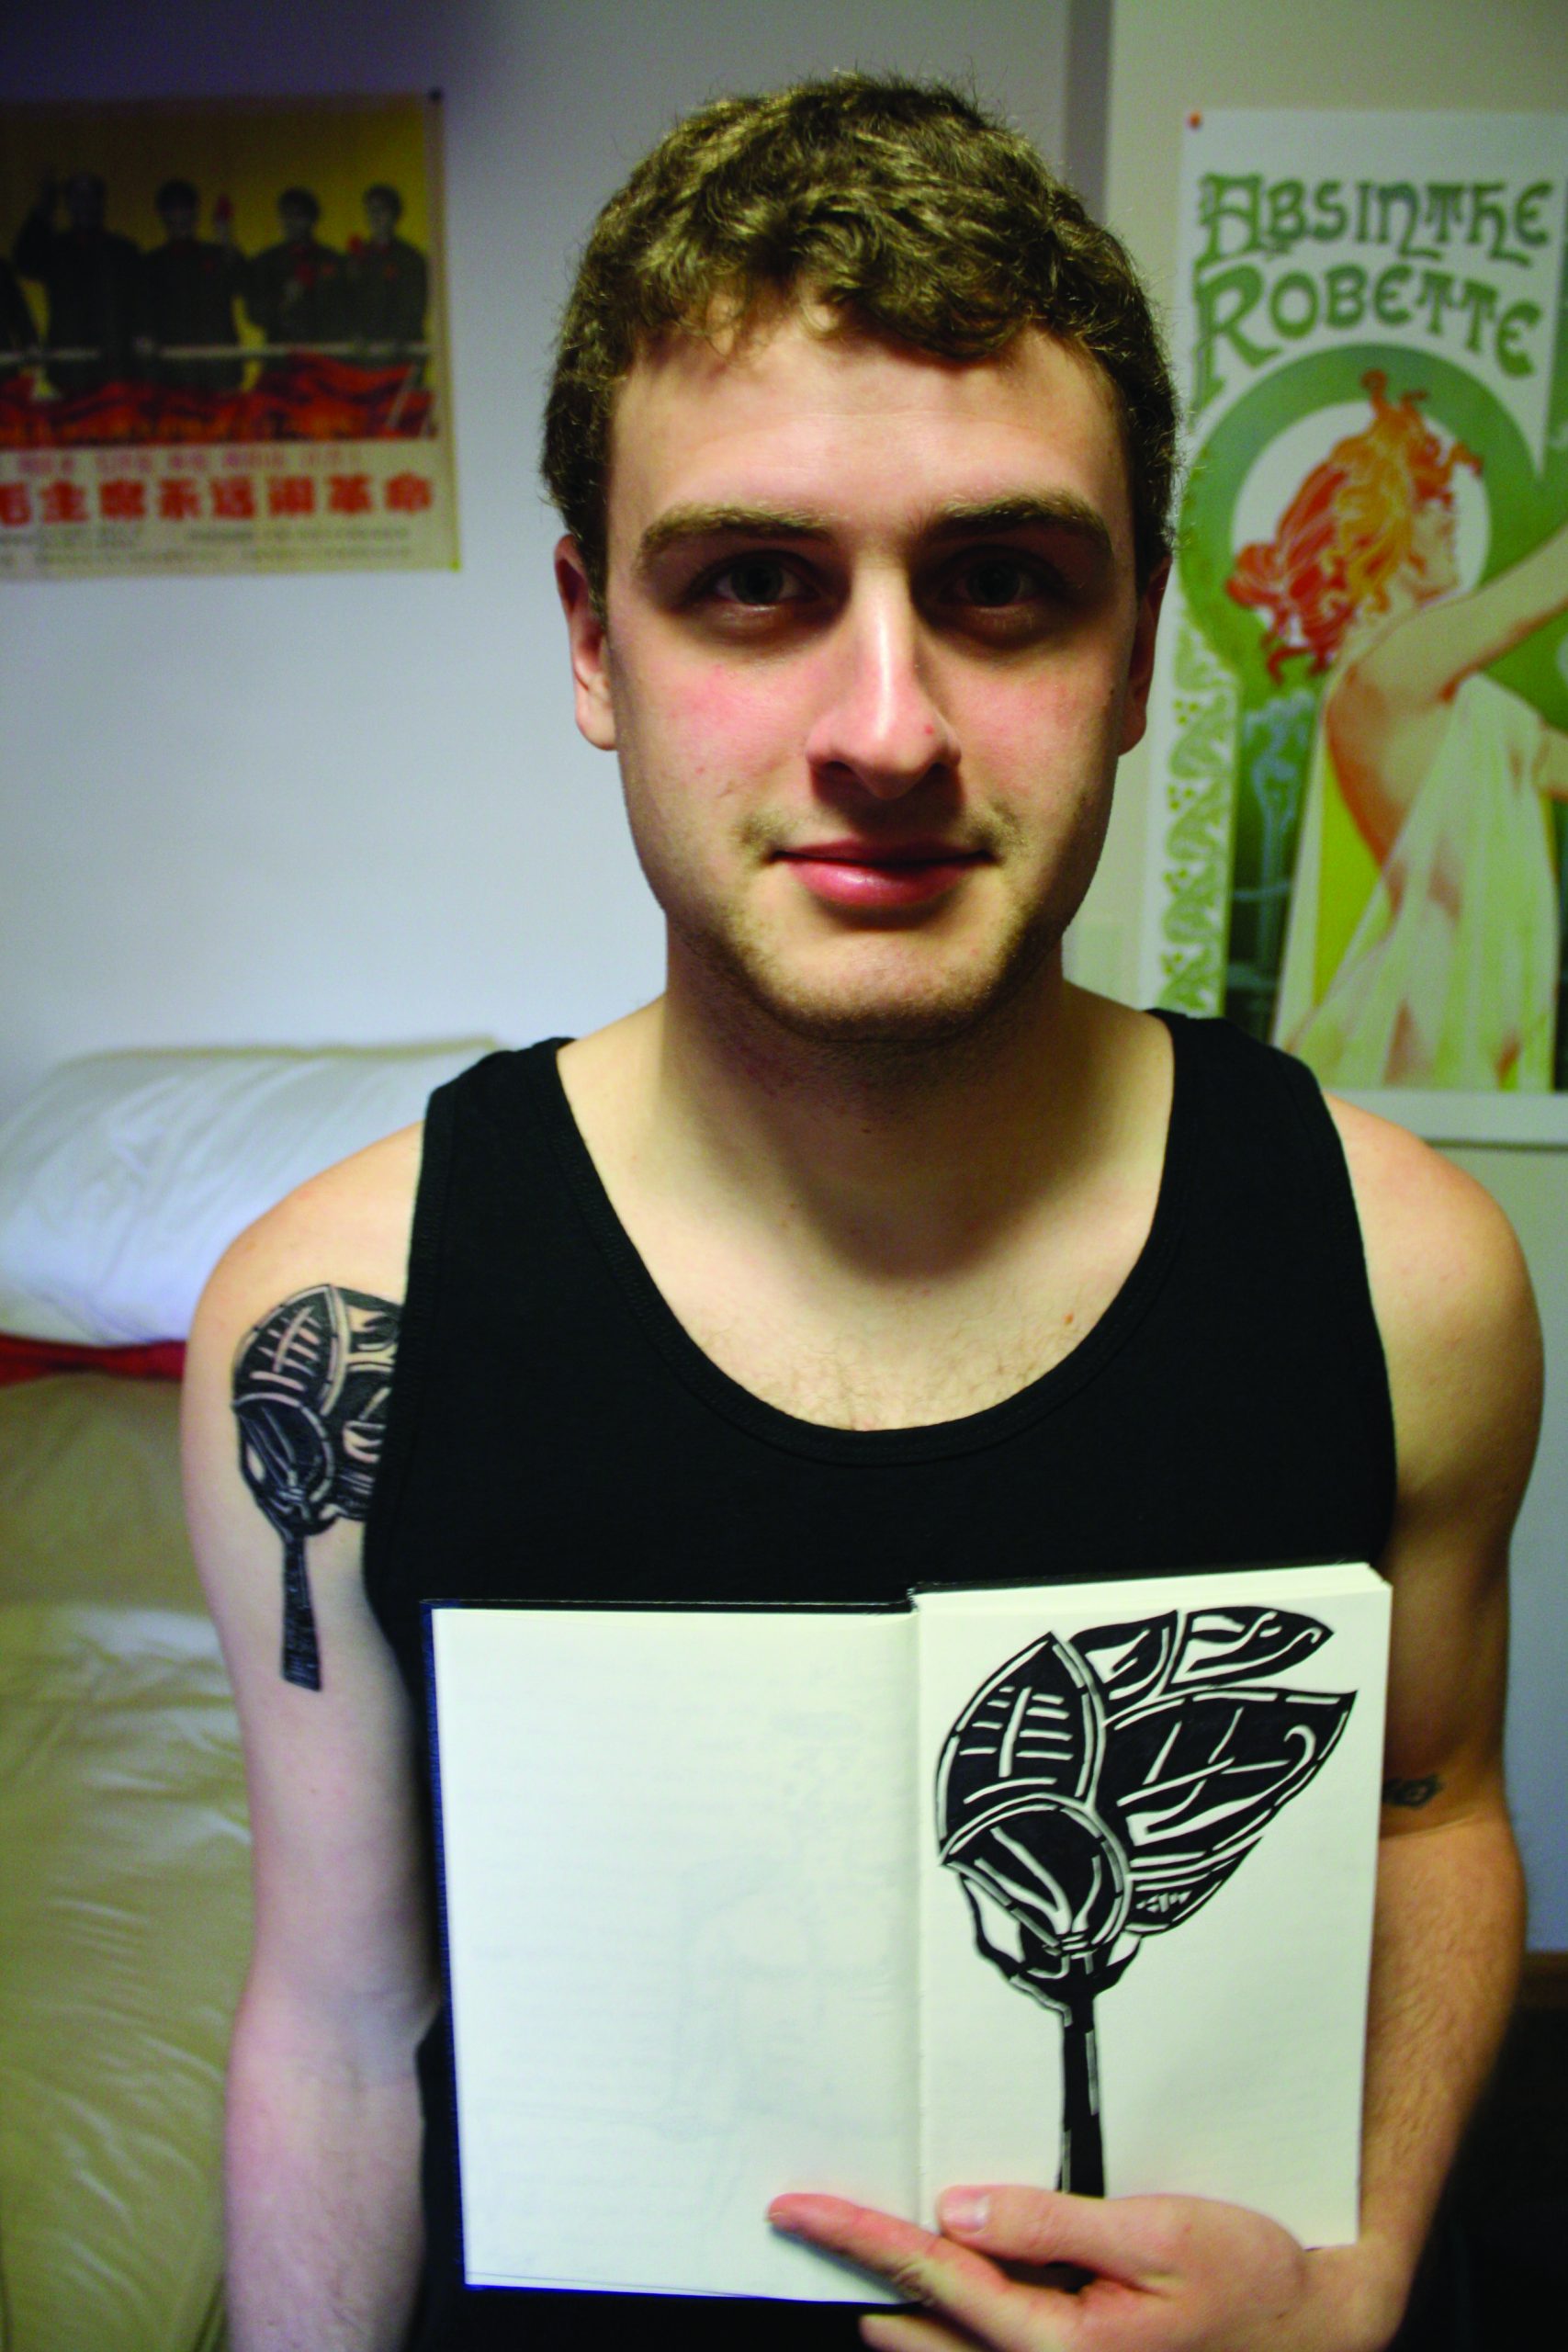 Ben Adams shows off his self-designed tattoo